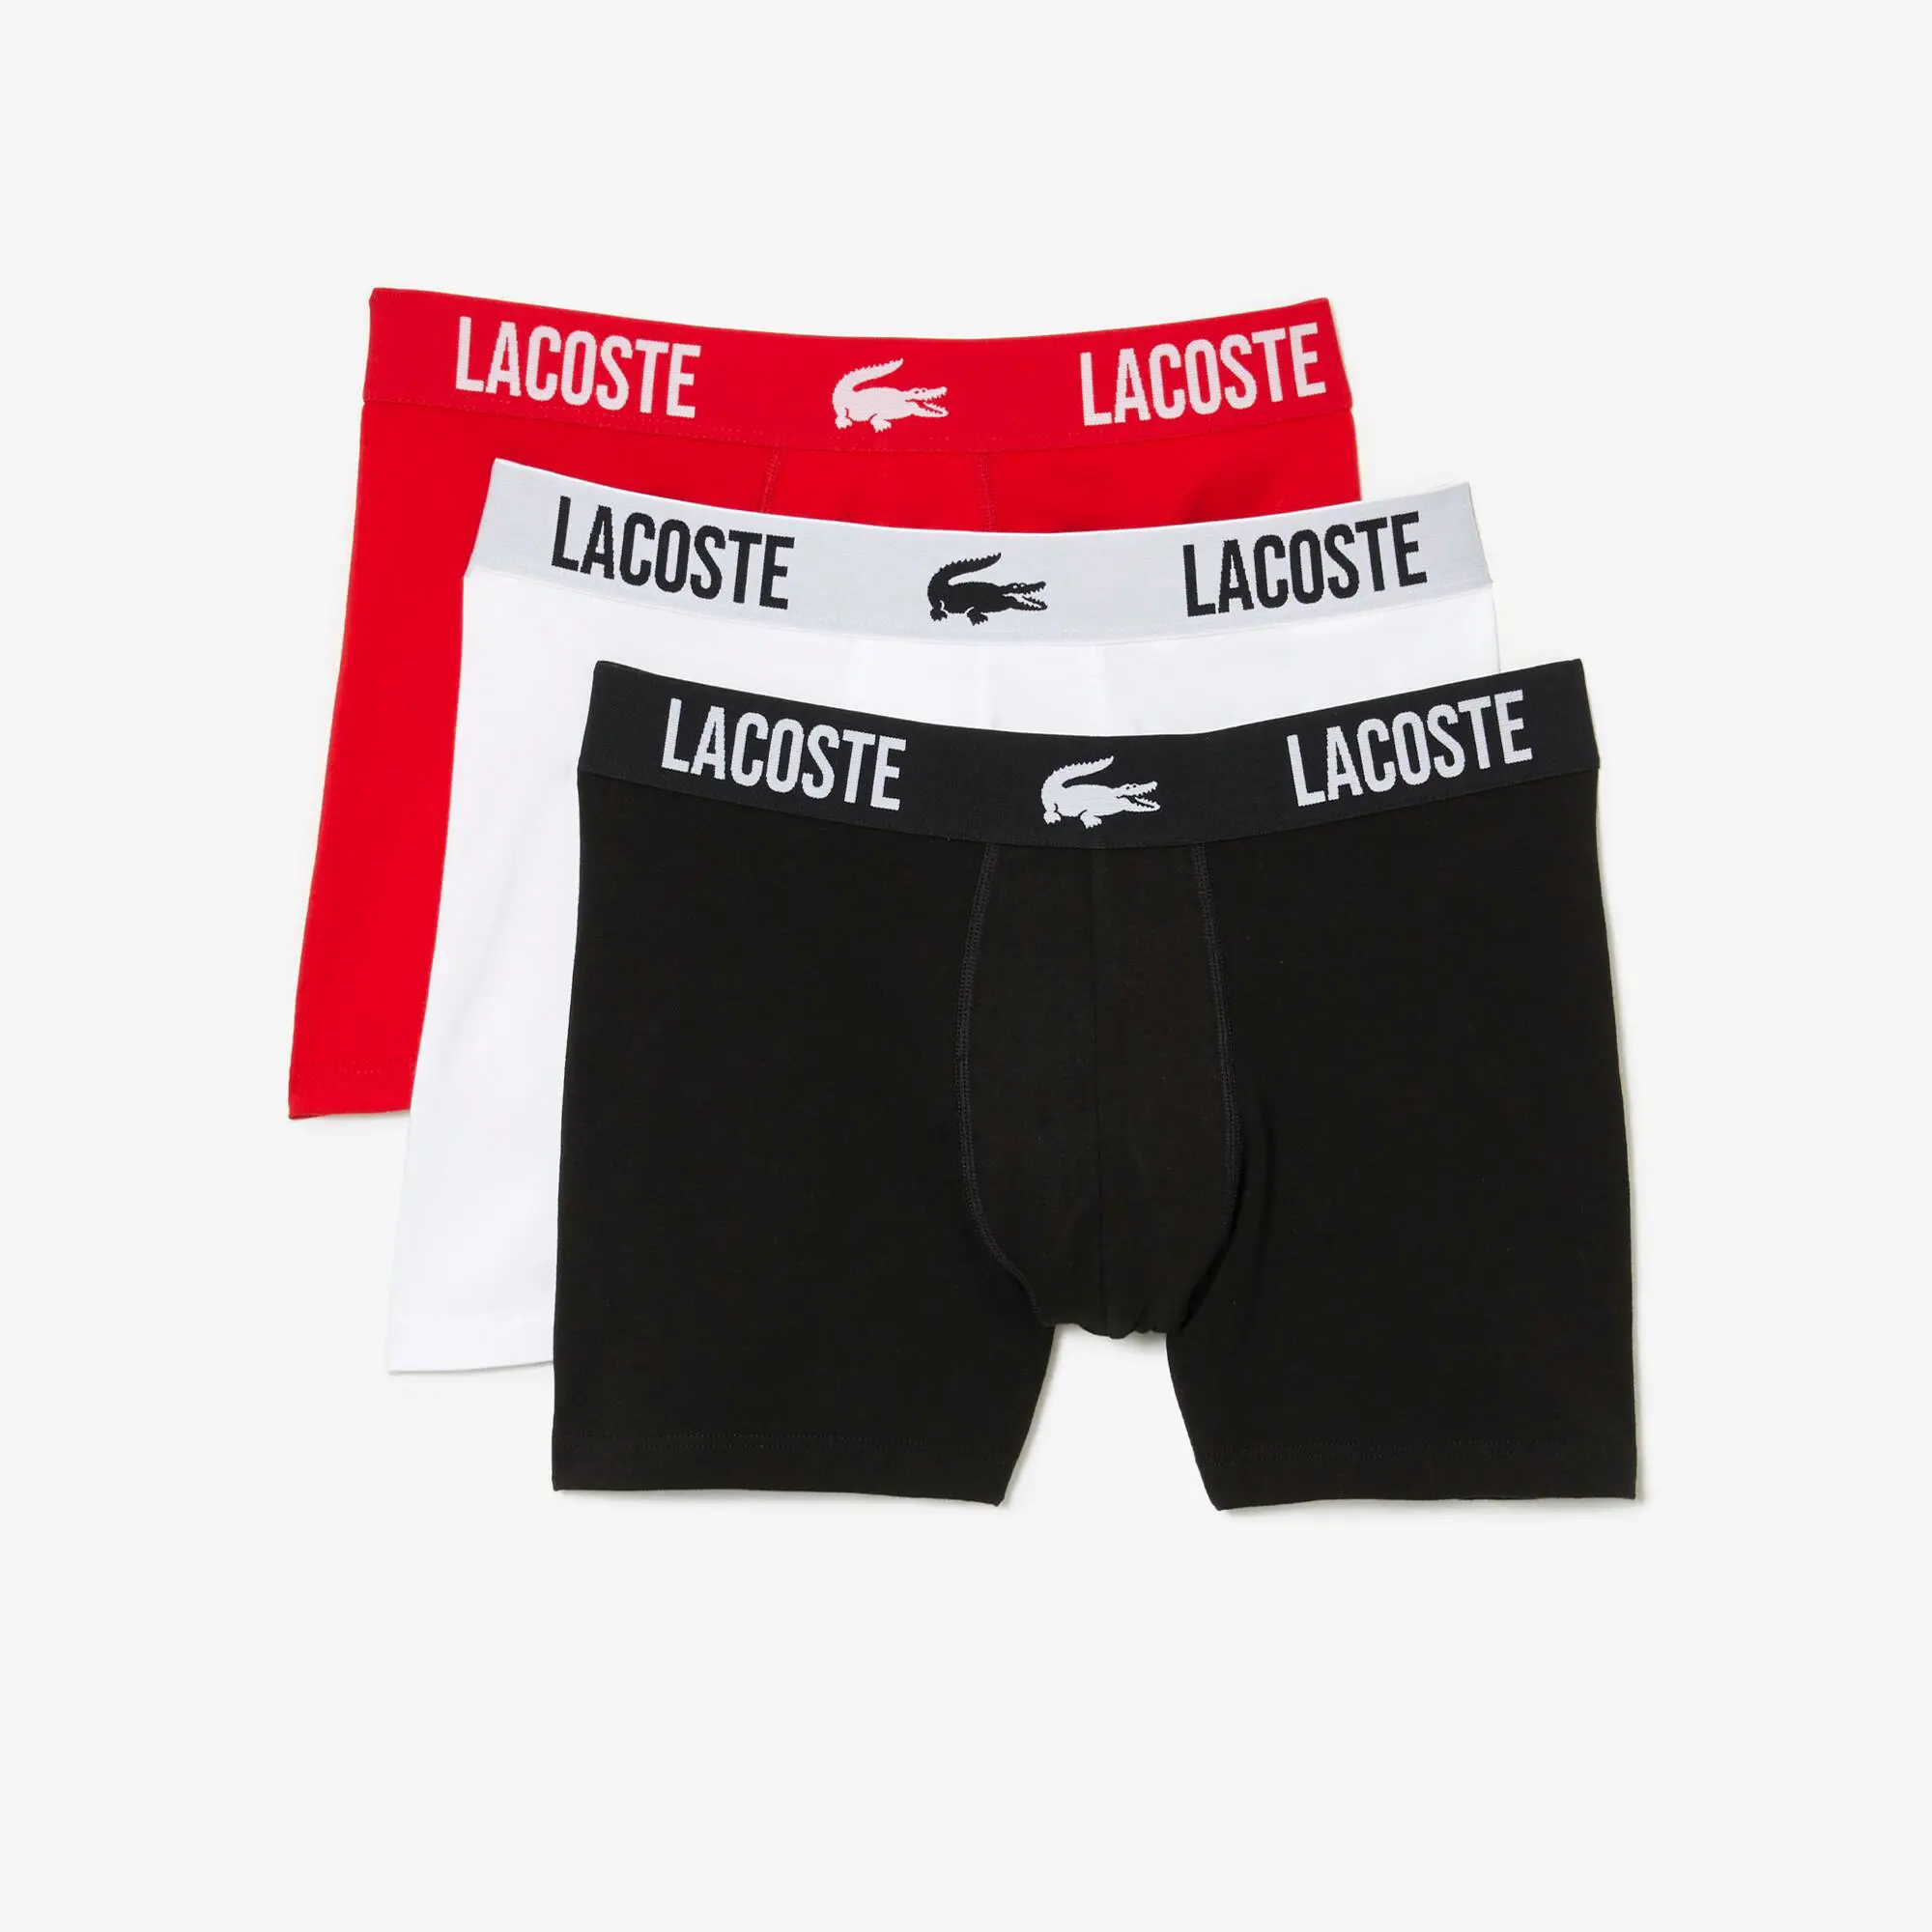 Lacoste Men’s Branded Contrast Crocodile Boxer Brief 3-Pack. 2